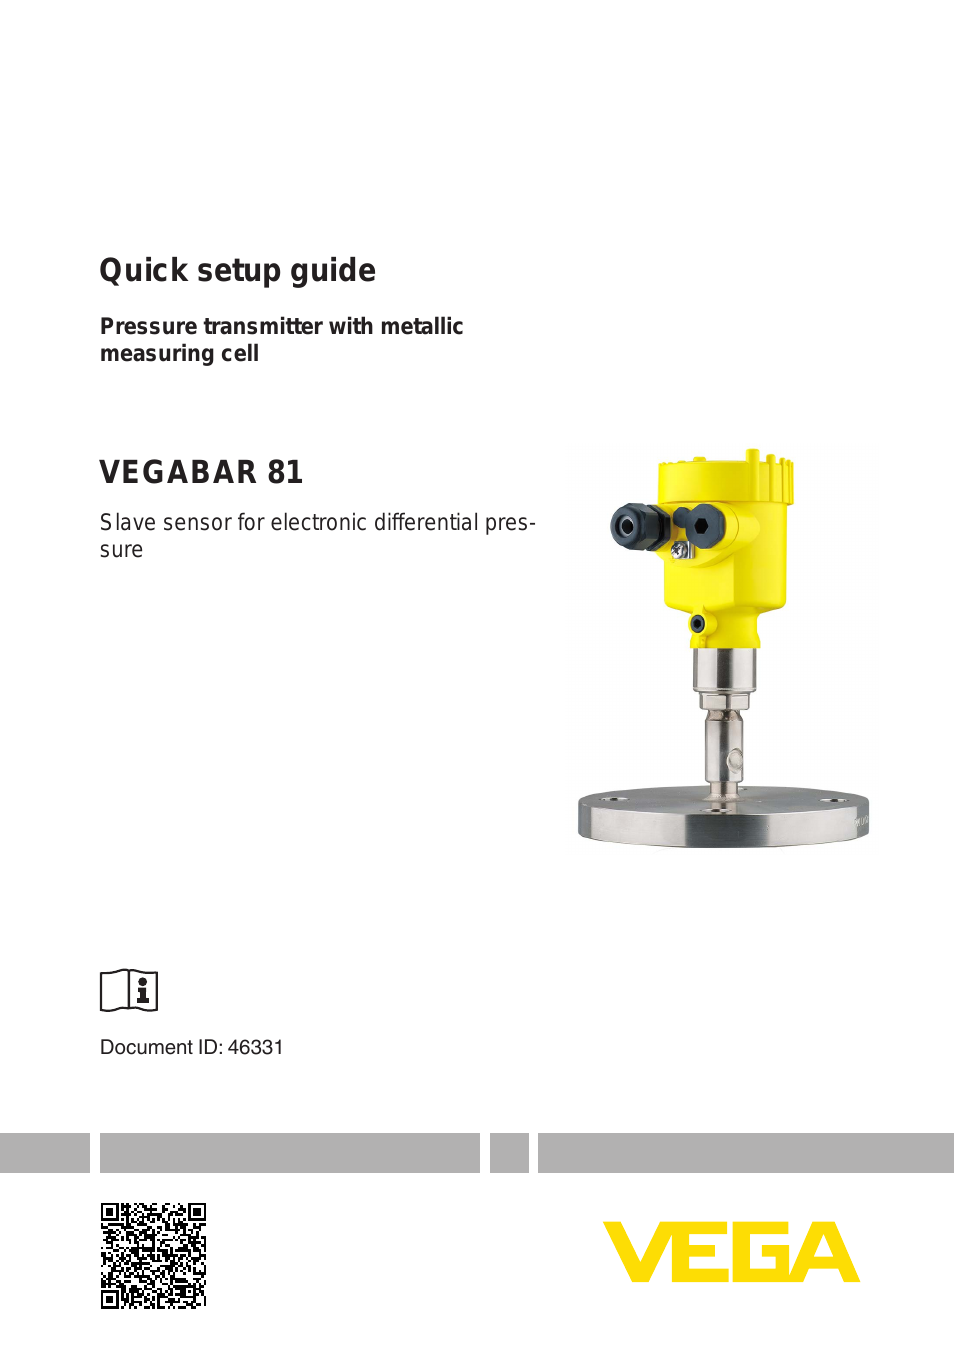 VEGABAR 81 Save sensor - Quick setup guide